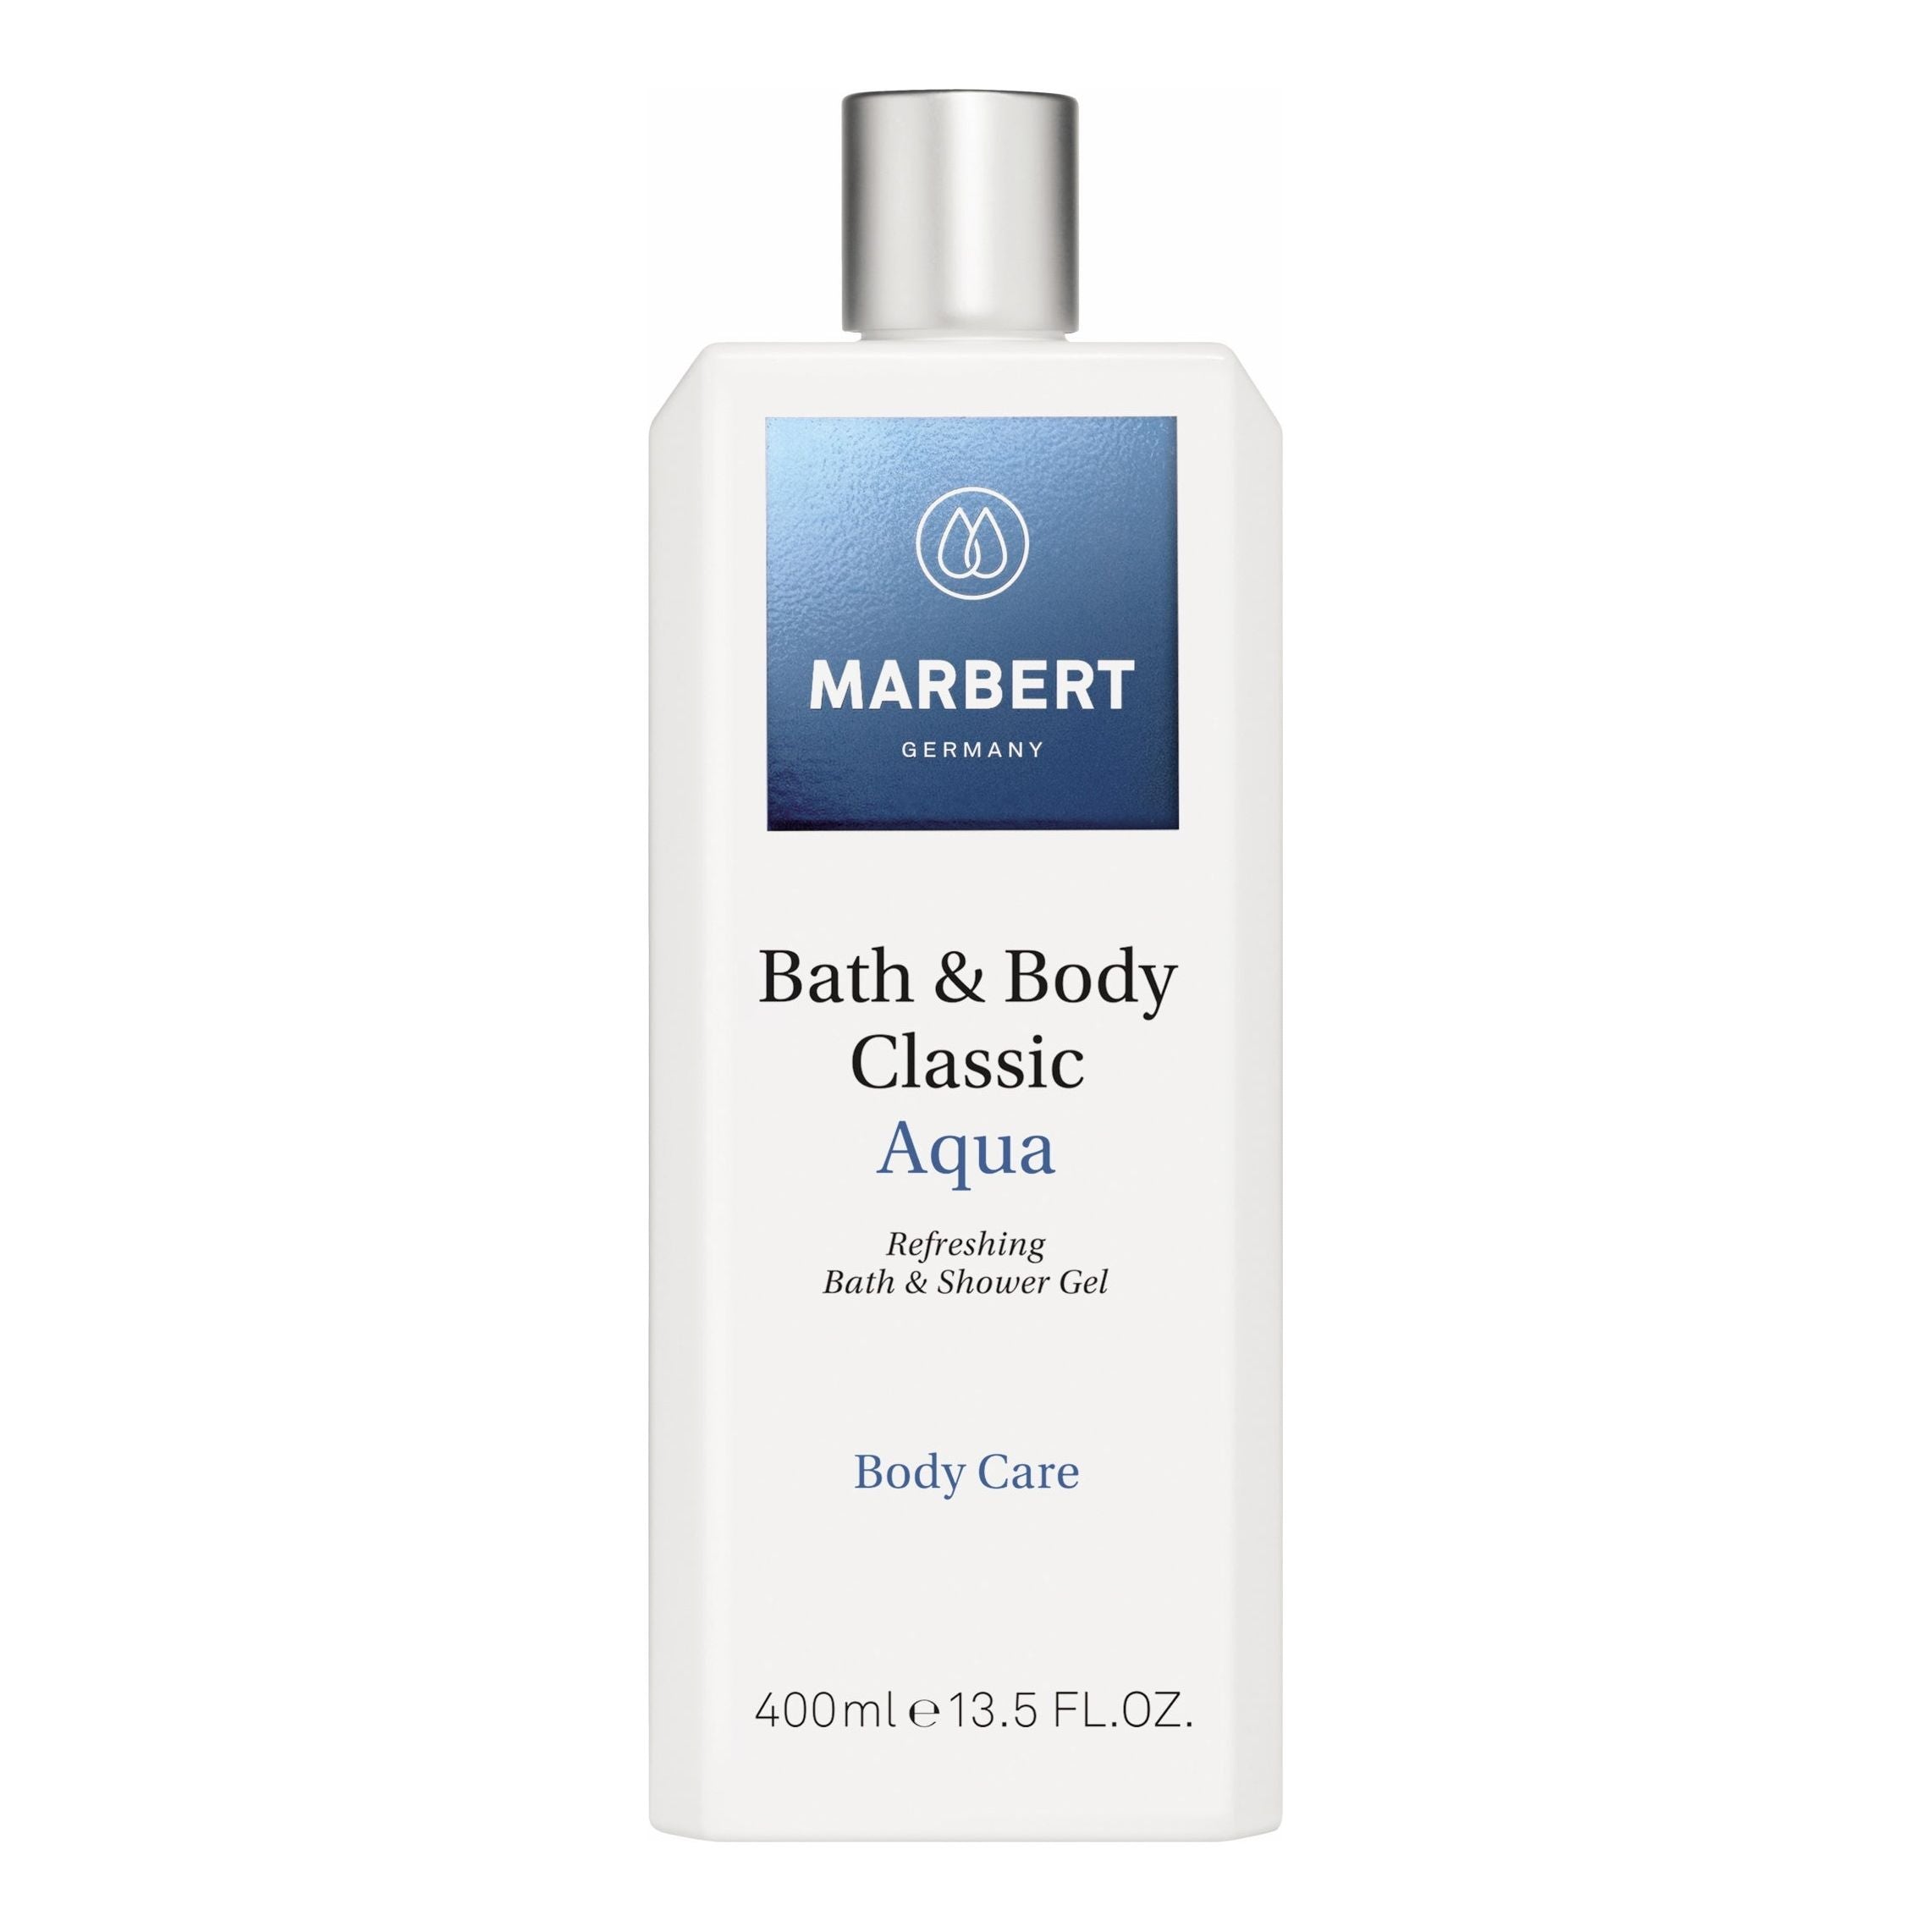 Marbert - Bath & Body Classic Aqua - Bade- und Duschgel